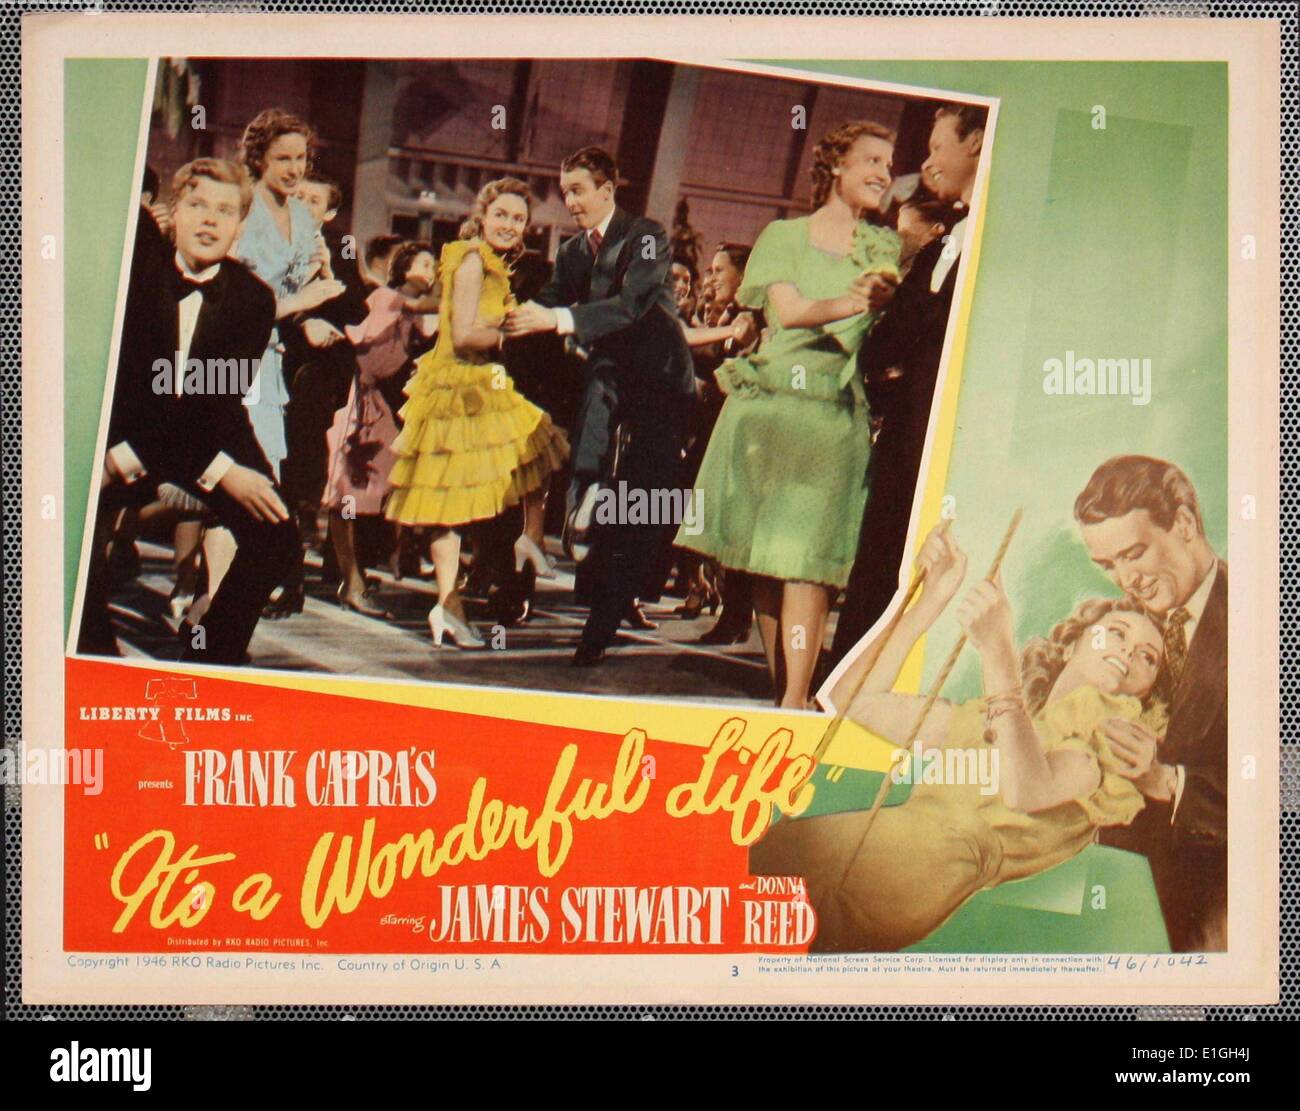 It's a Wonderful Life a 1946 American Christmas fantasy comedy-drama film starring James Stewart. Stock Photo